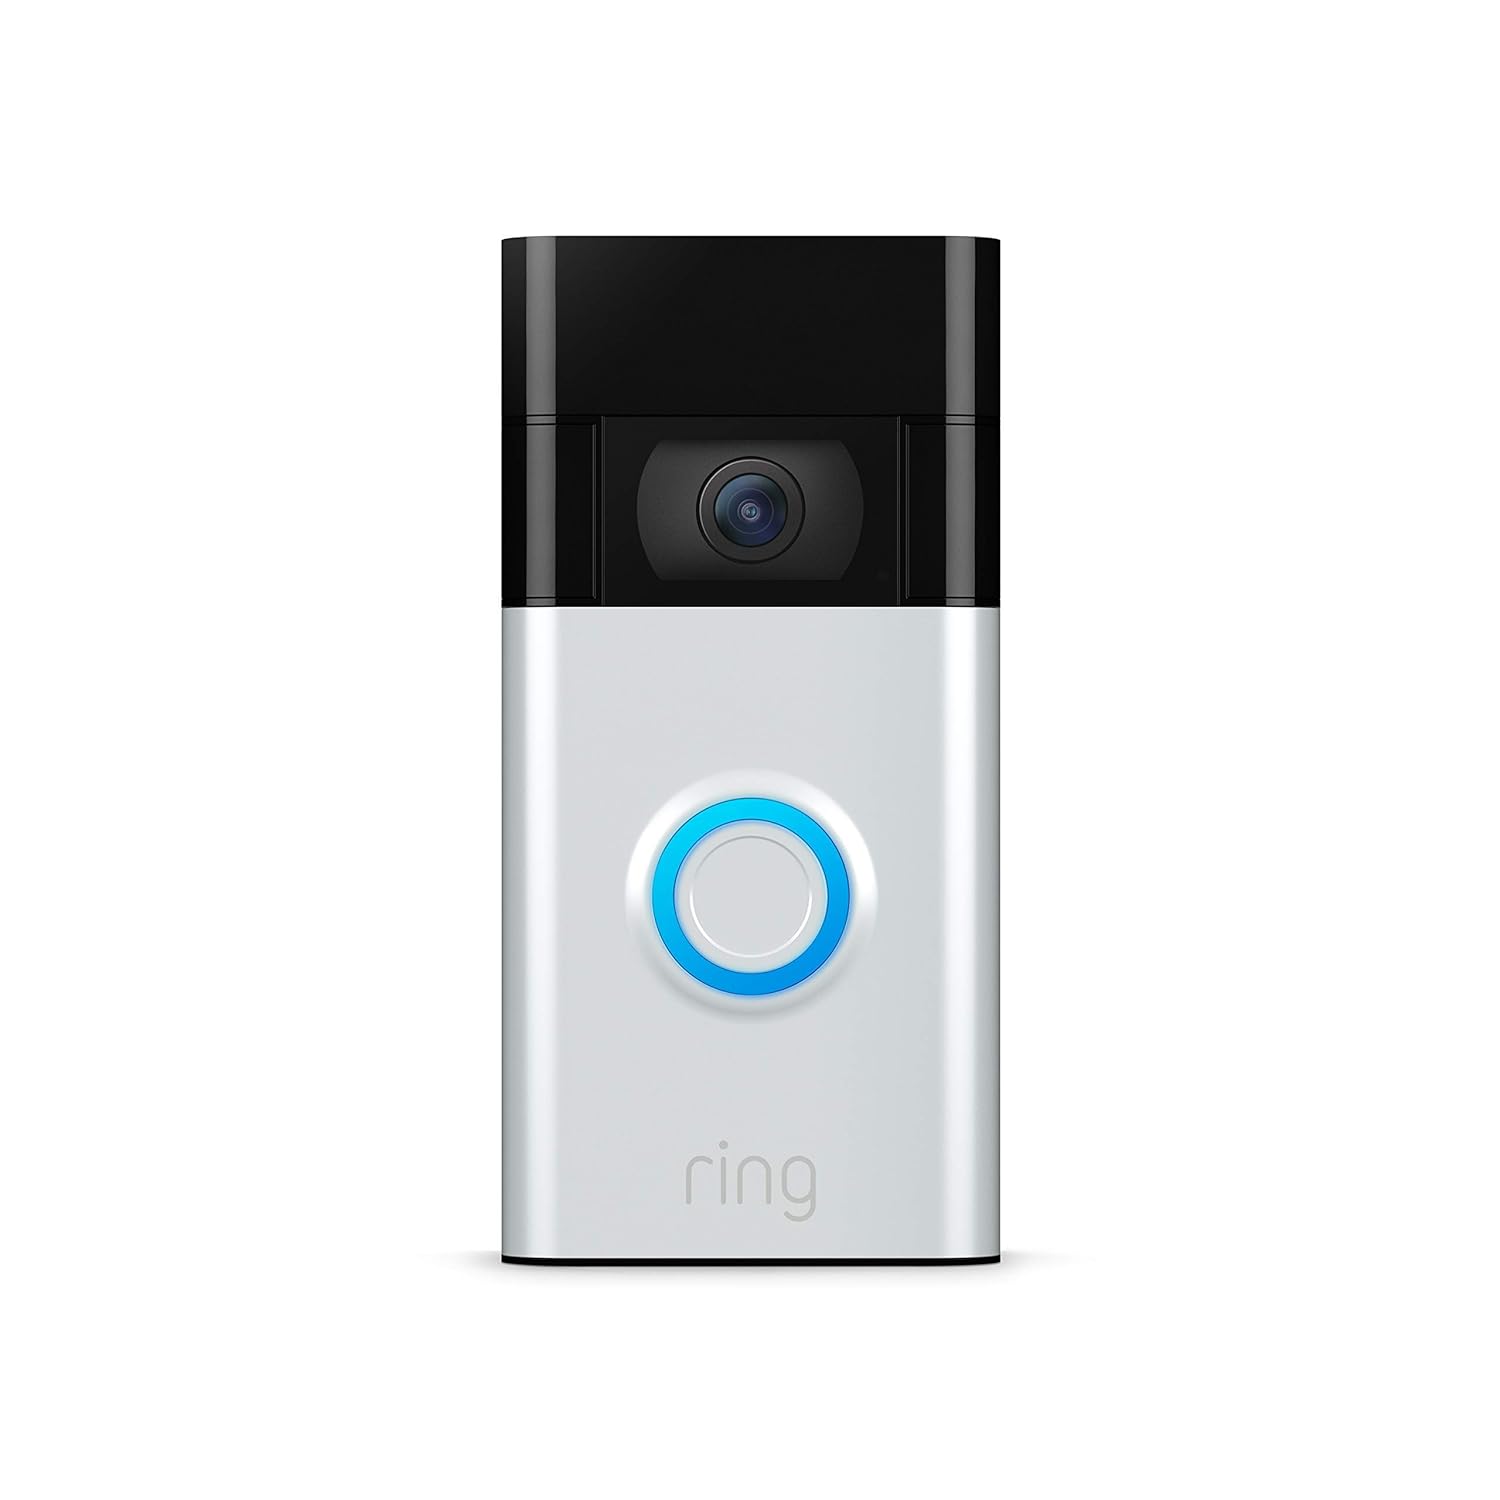 Ring Video Doorbell - 1080p HD video, improved motion detection, easy installation – Satin Nickel - $60